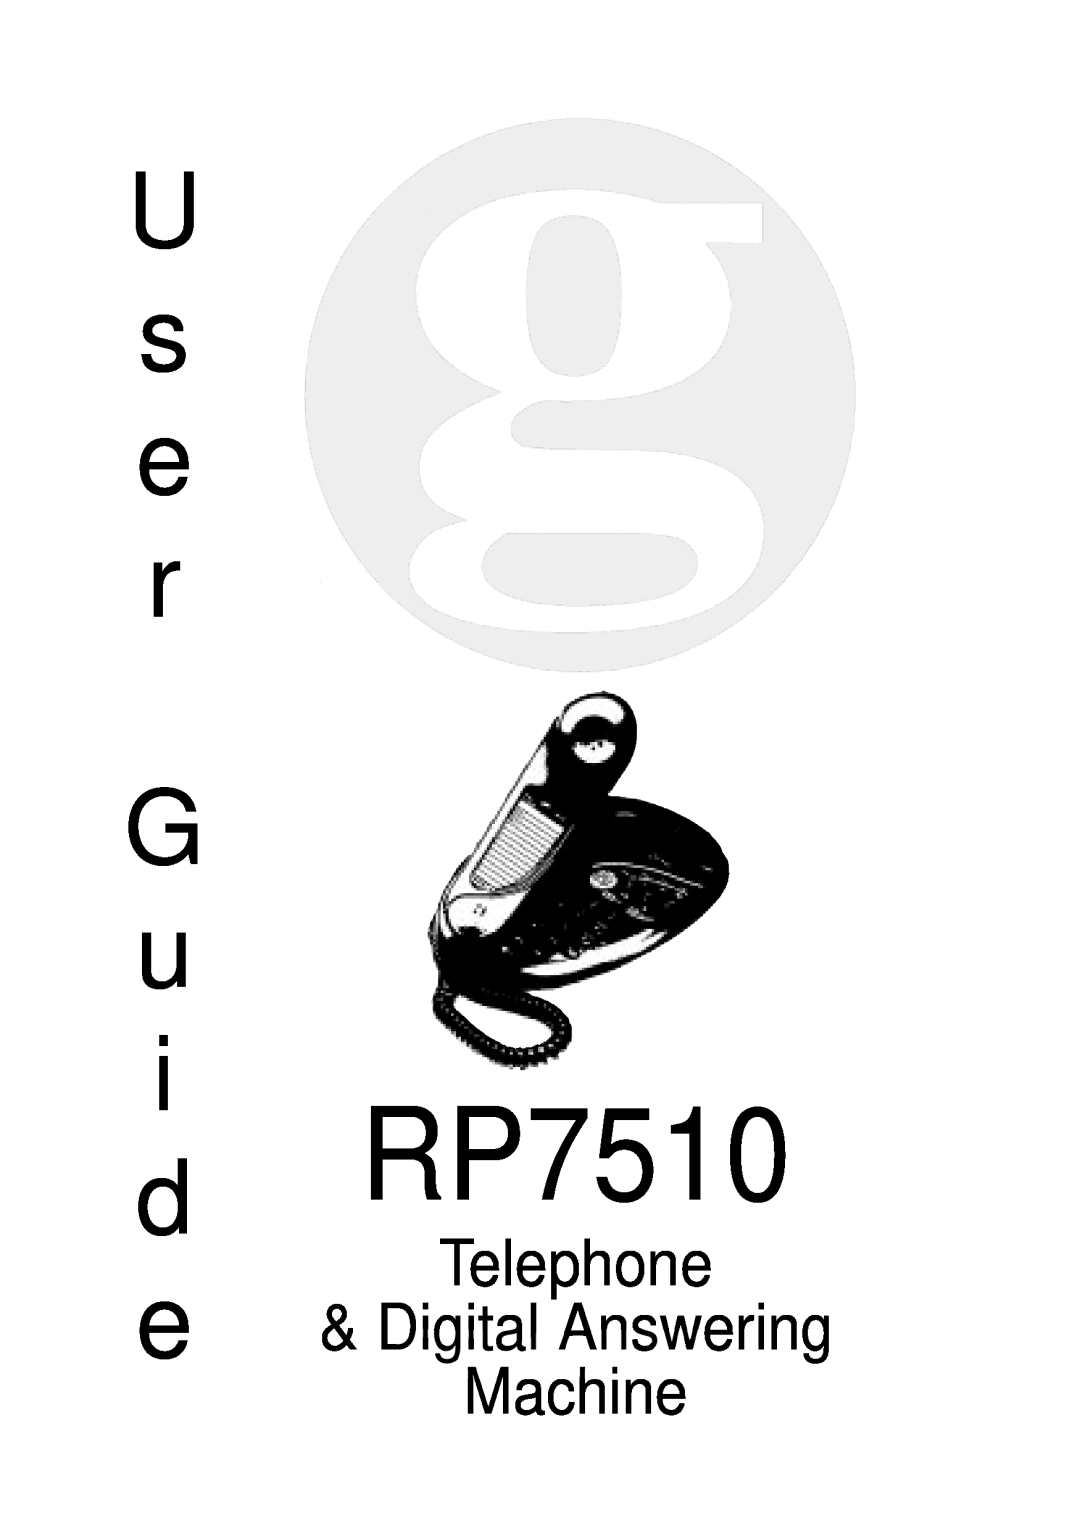 Geemarc manual Telephone e & Digital Answering Machine, d RP7510, U s e r G u i 